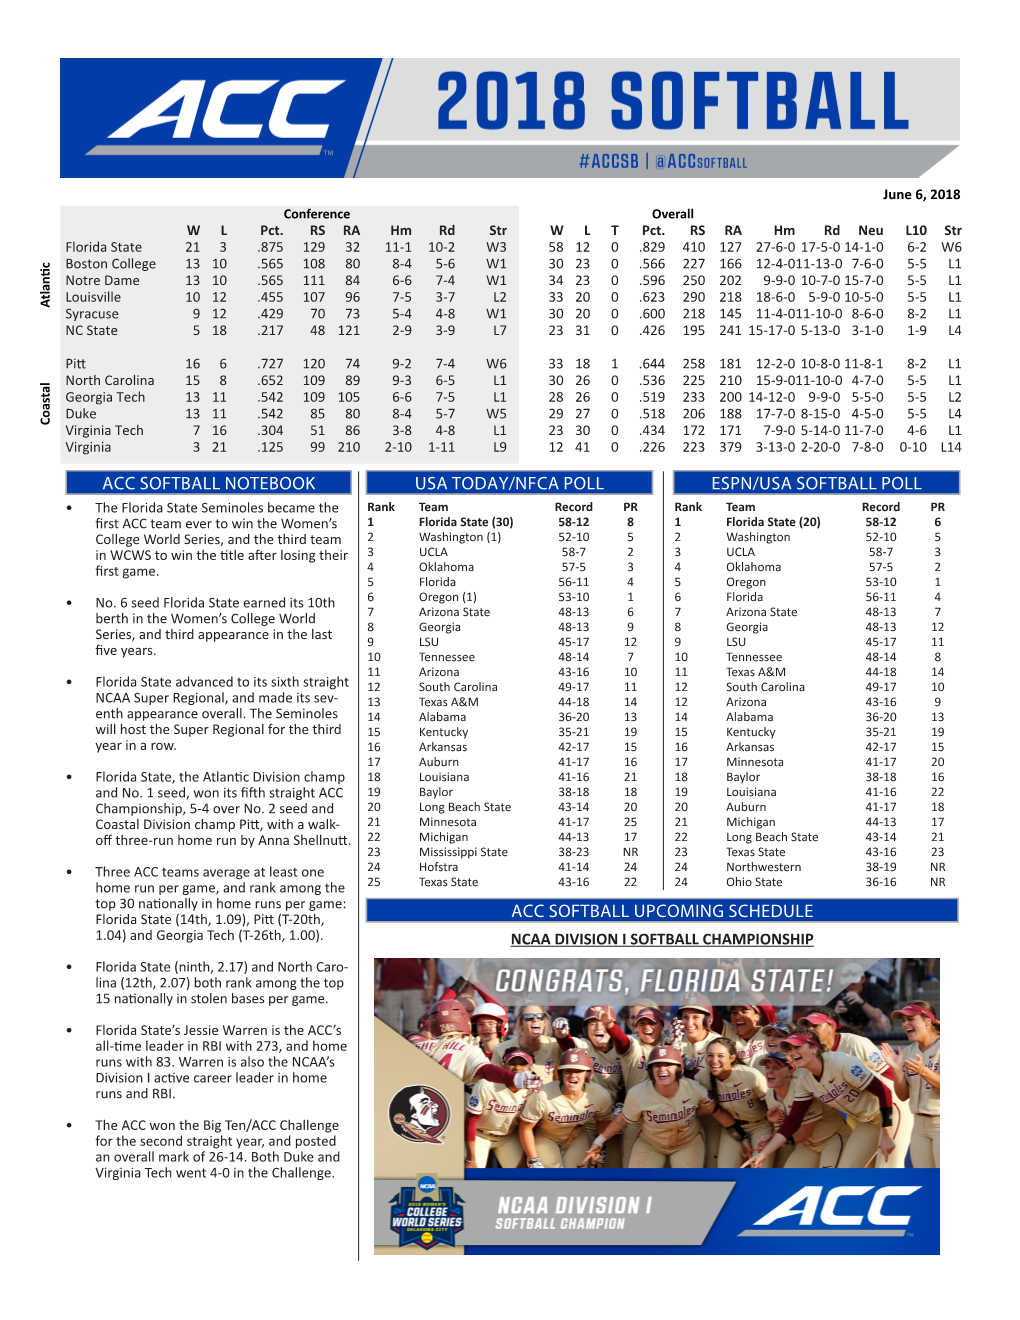 Acc Softball Notebook Espn/Usa Softball Poll Usa